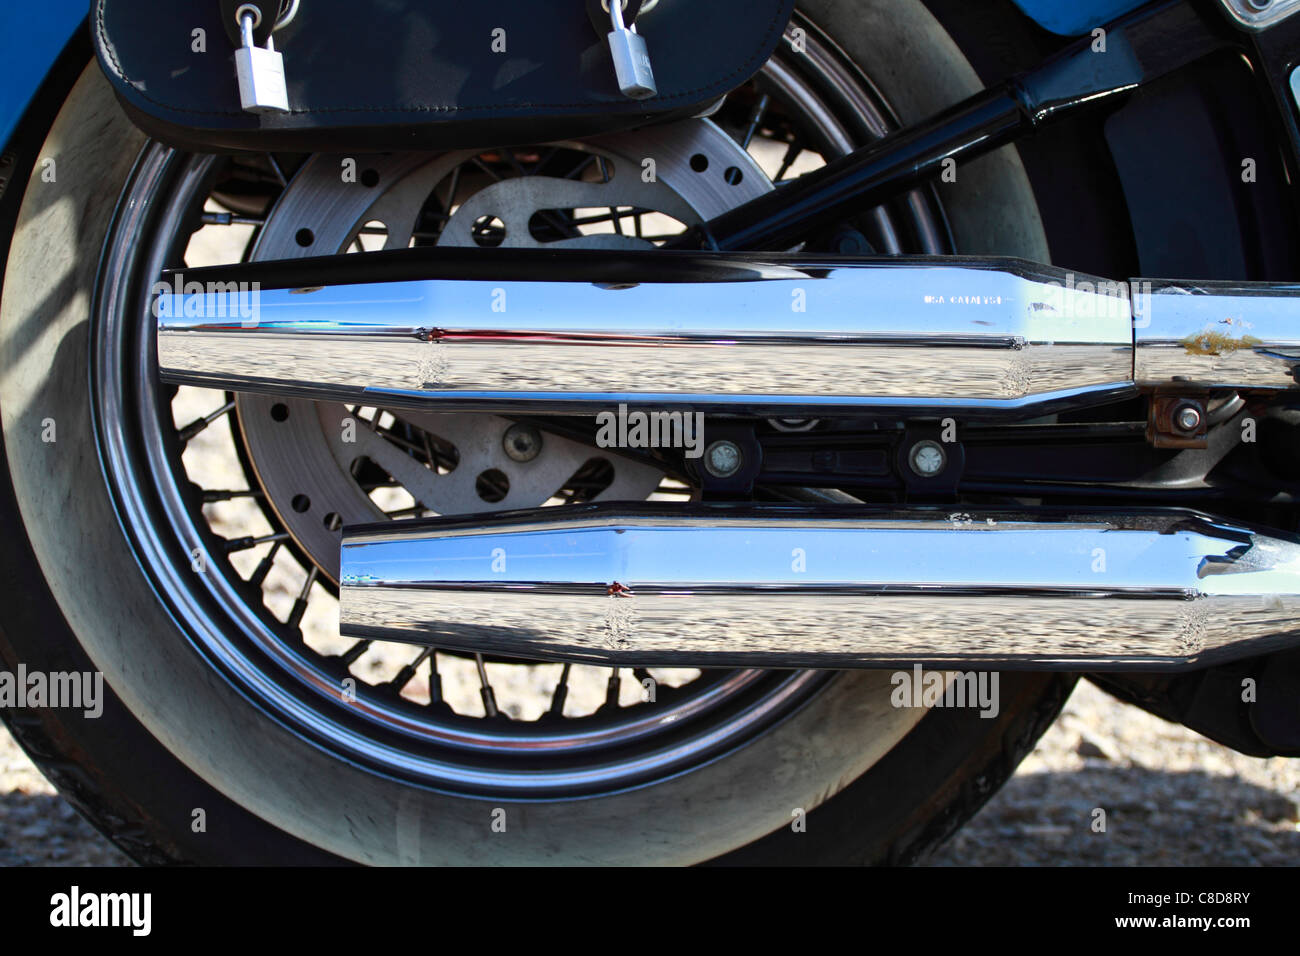 Harley Davidson, exhaust detail Stock Photo